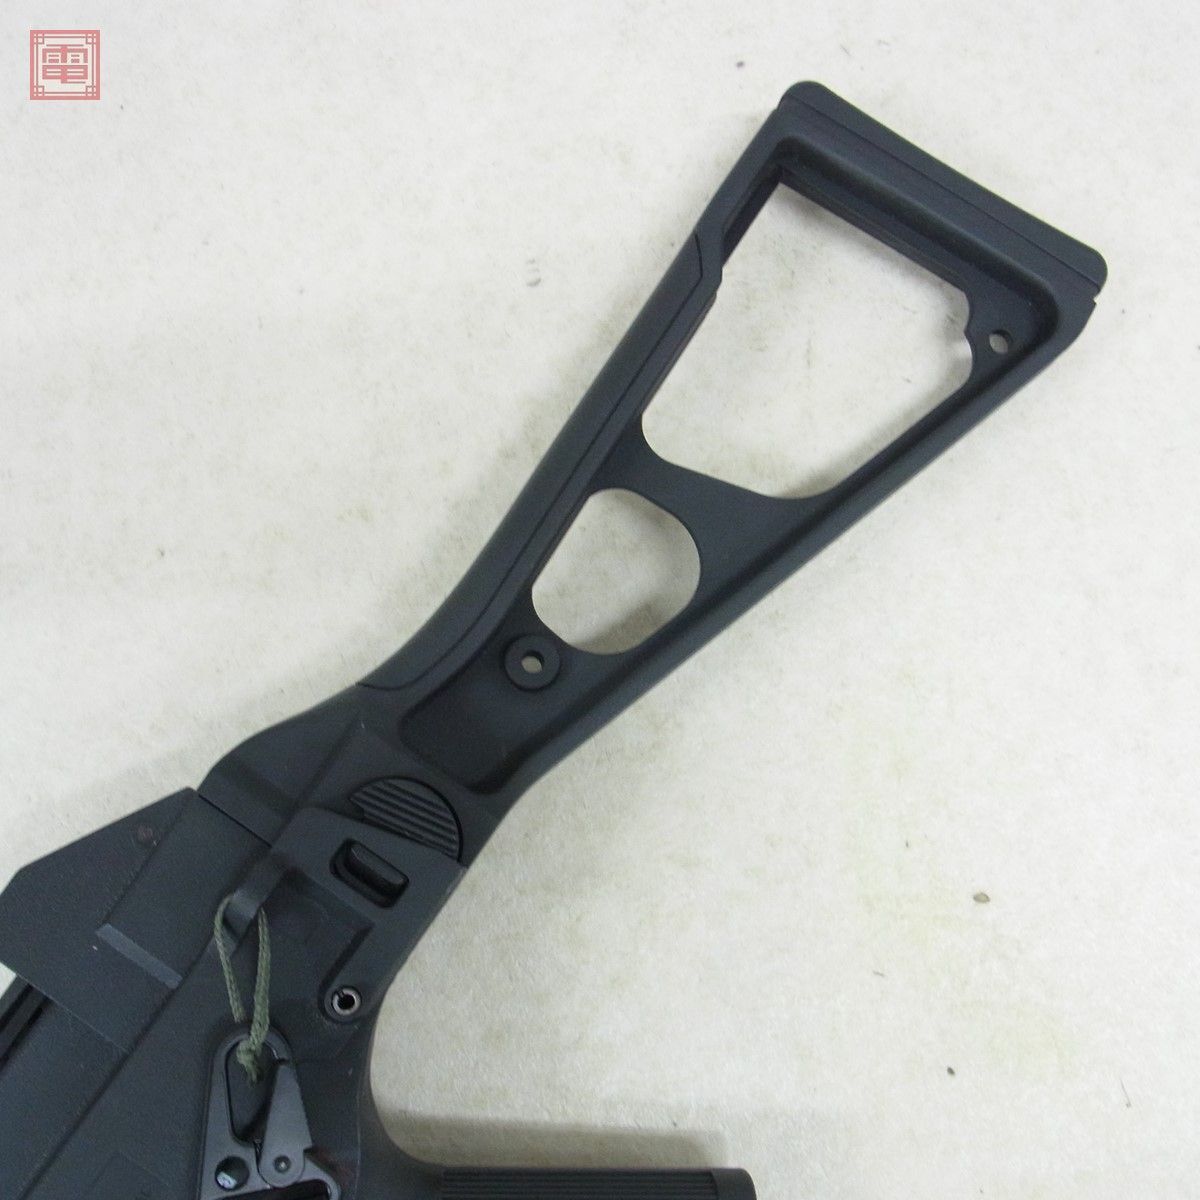 S&T electric gun UMP 45 electron trigger . speed custom SUREFIRE type flashlight attaching present condition goods [20